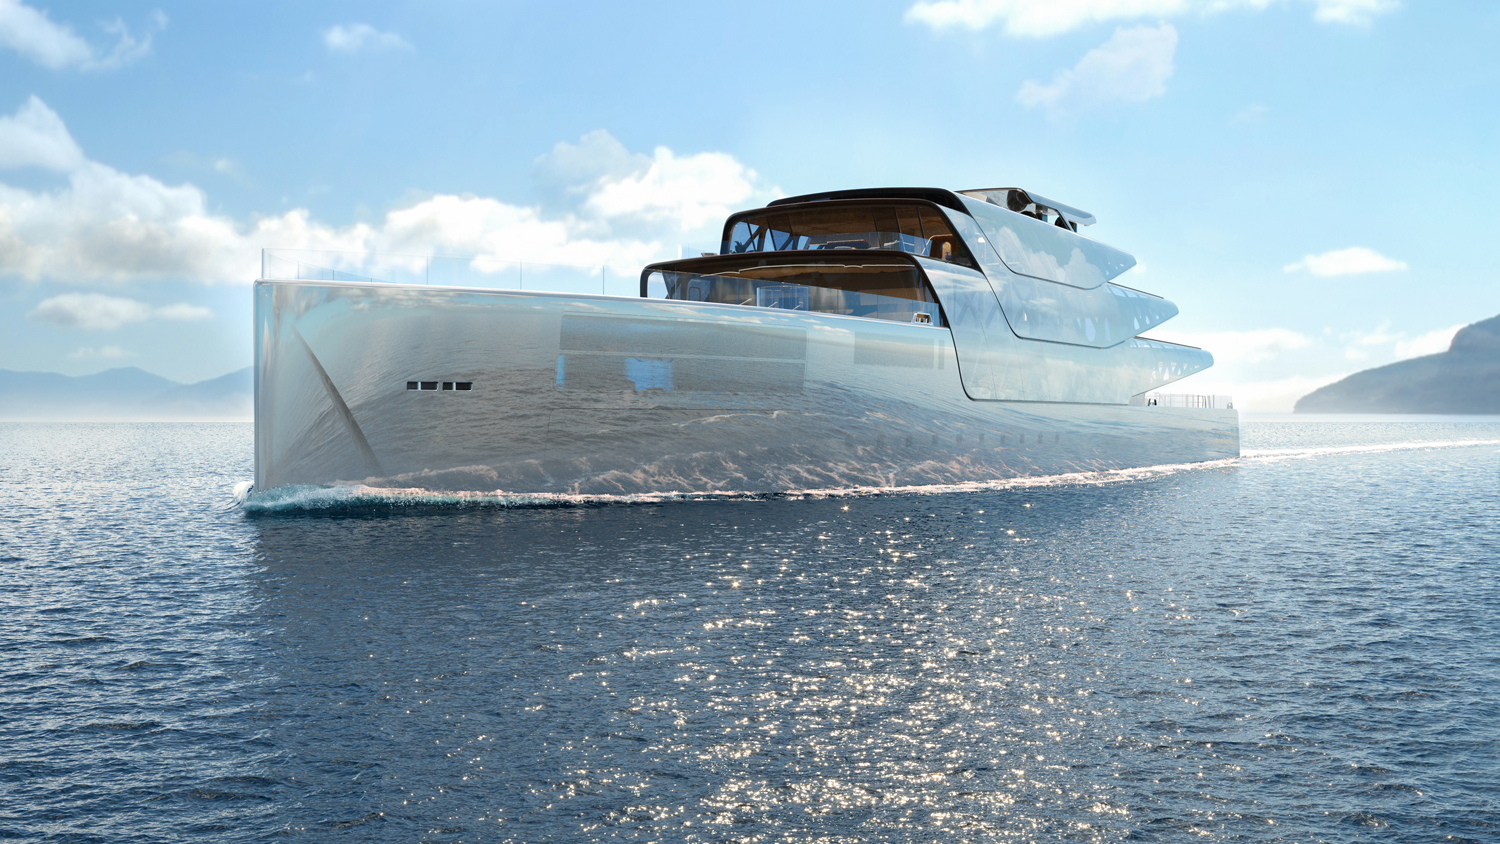 Pegasus super yacht